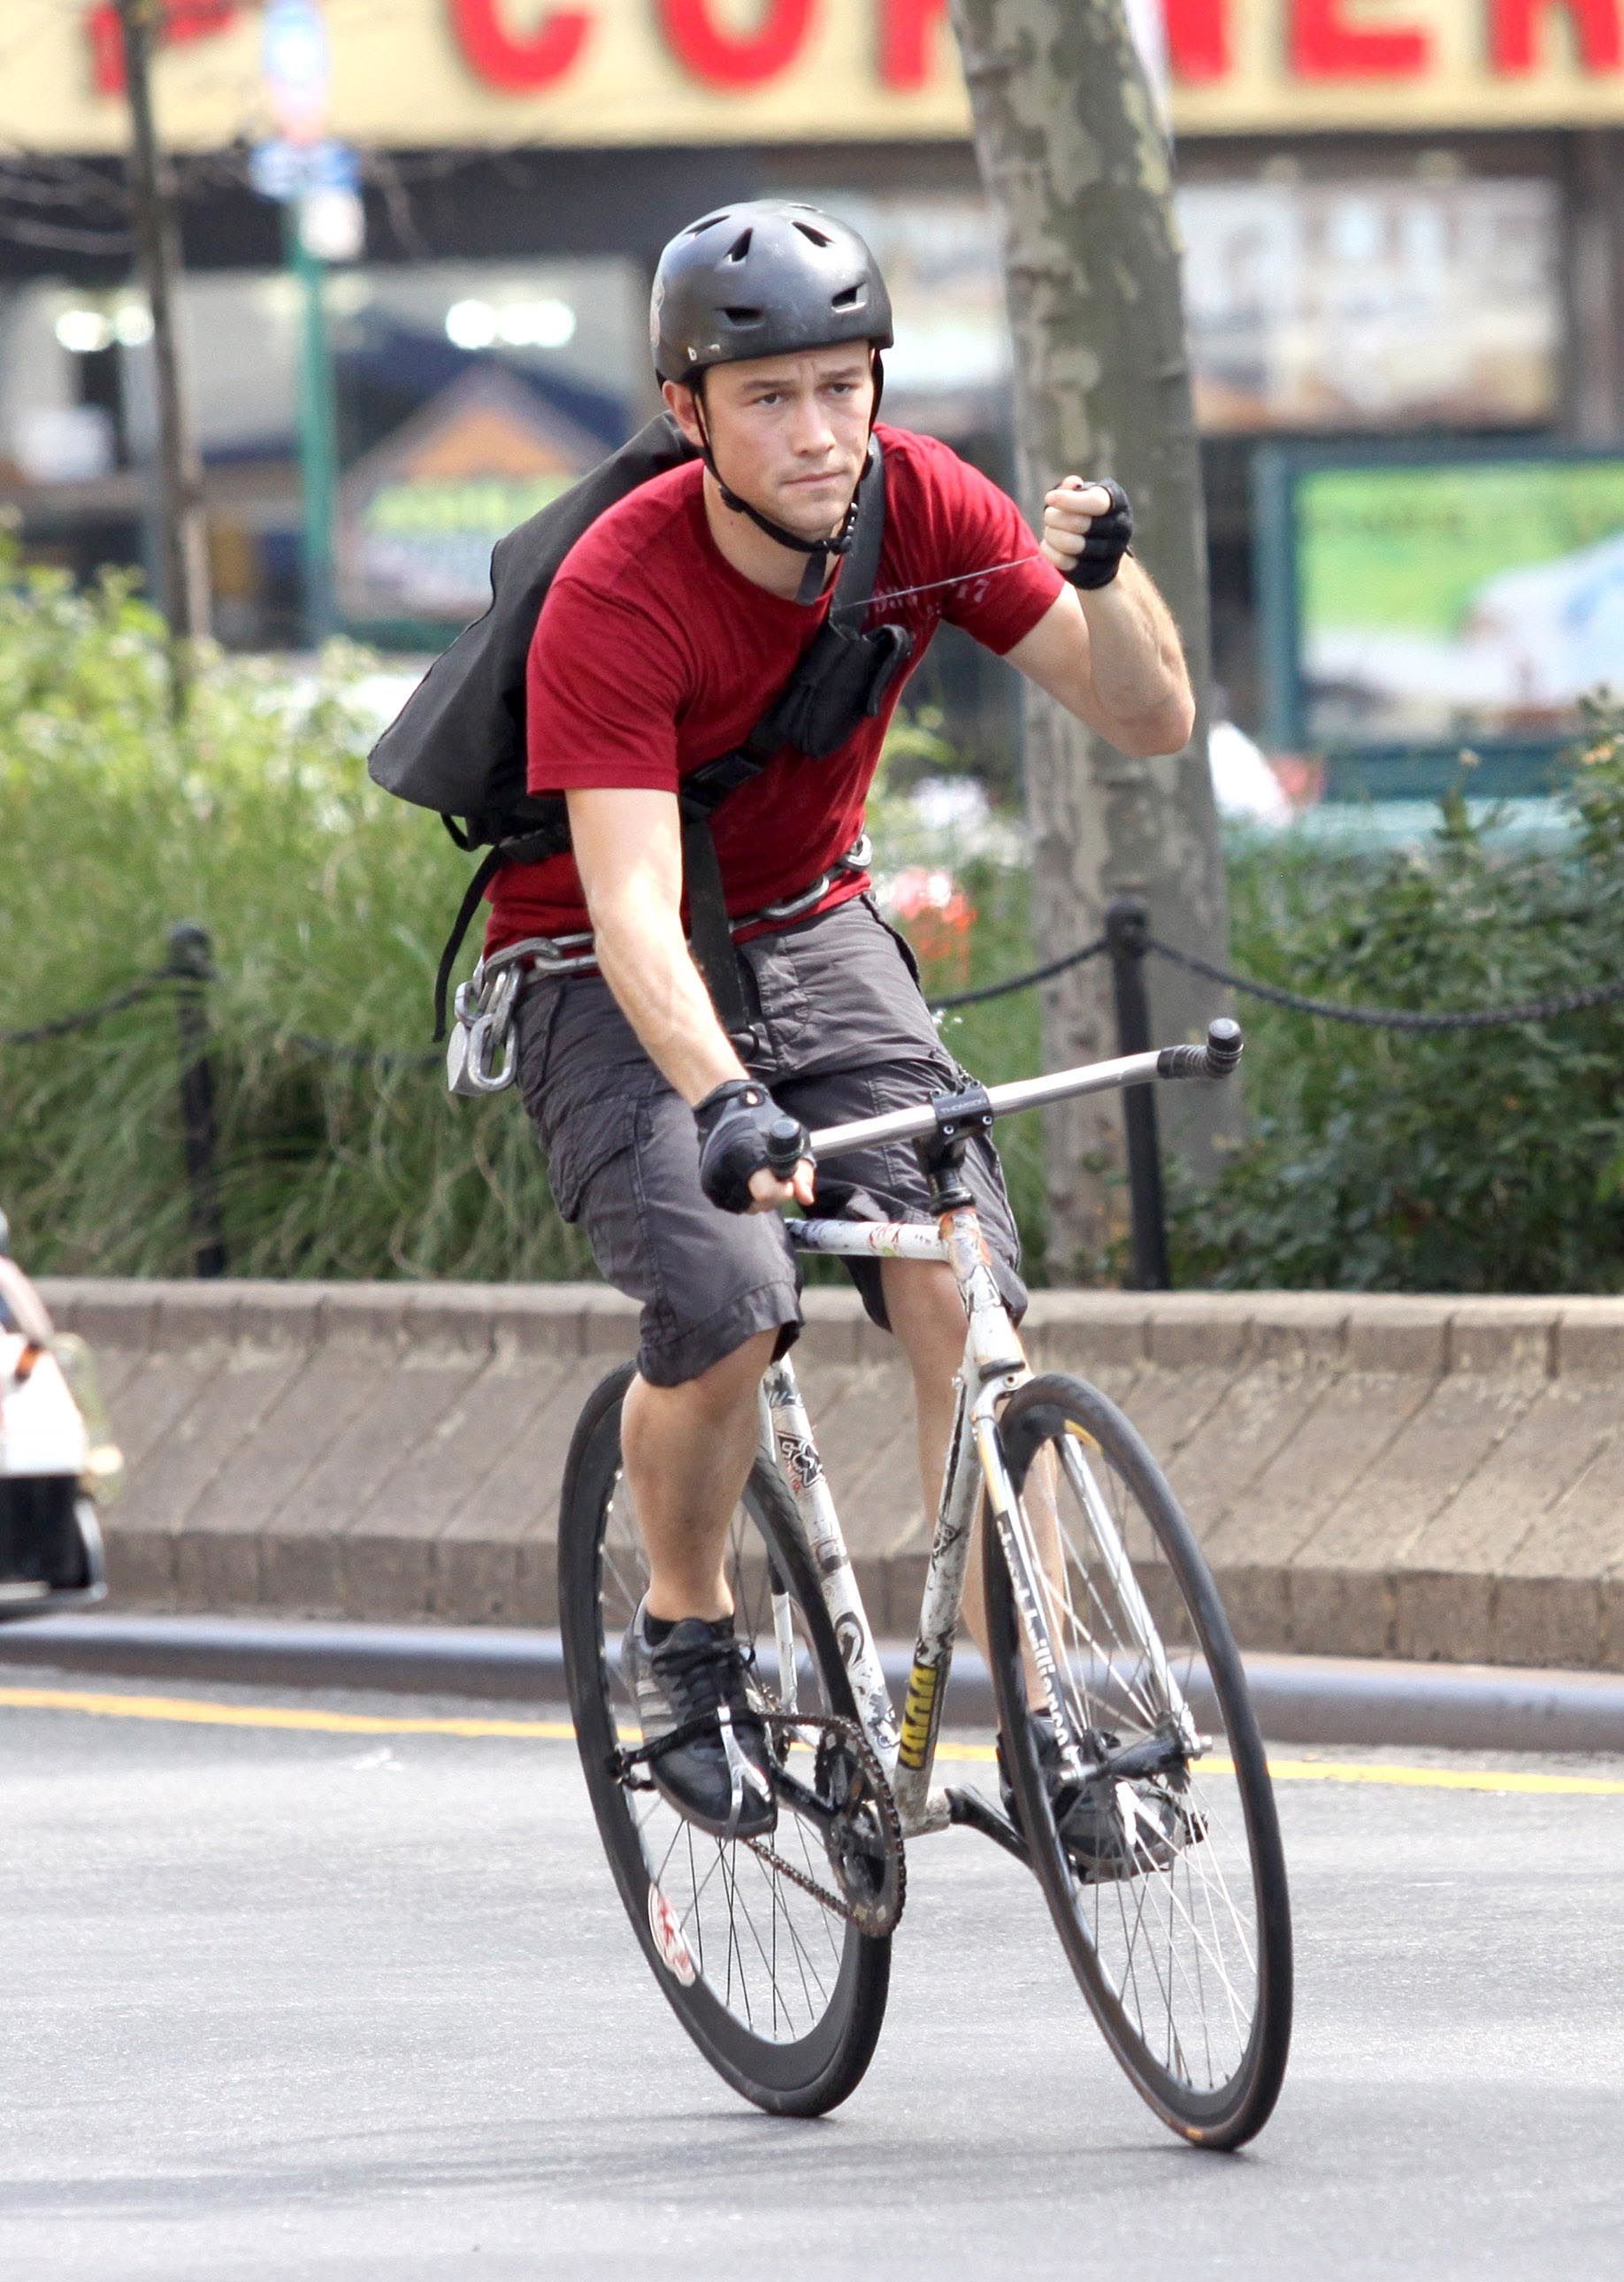 Joseph Gordon Levitt Hurt In Bike Crash While Filming New Movie